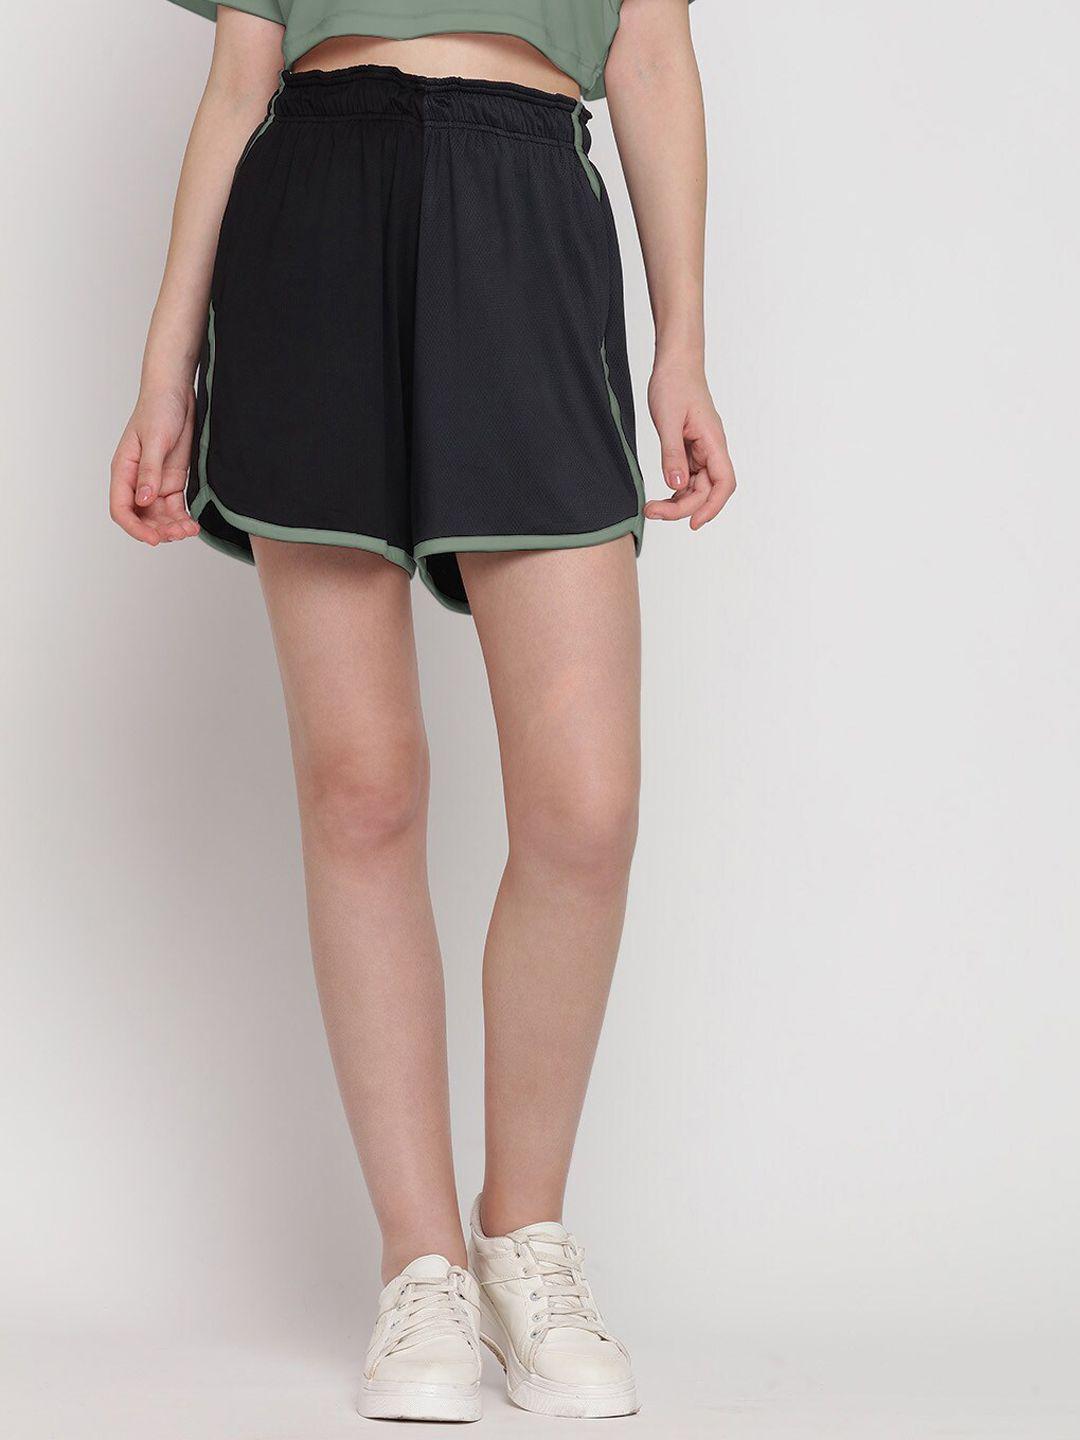 wearjukebox-women-high-rise-shorts